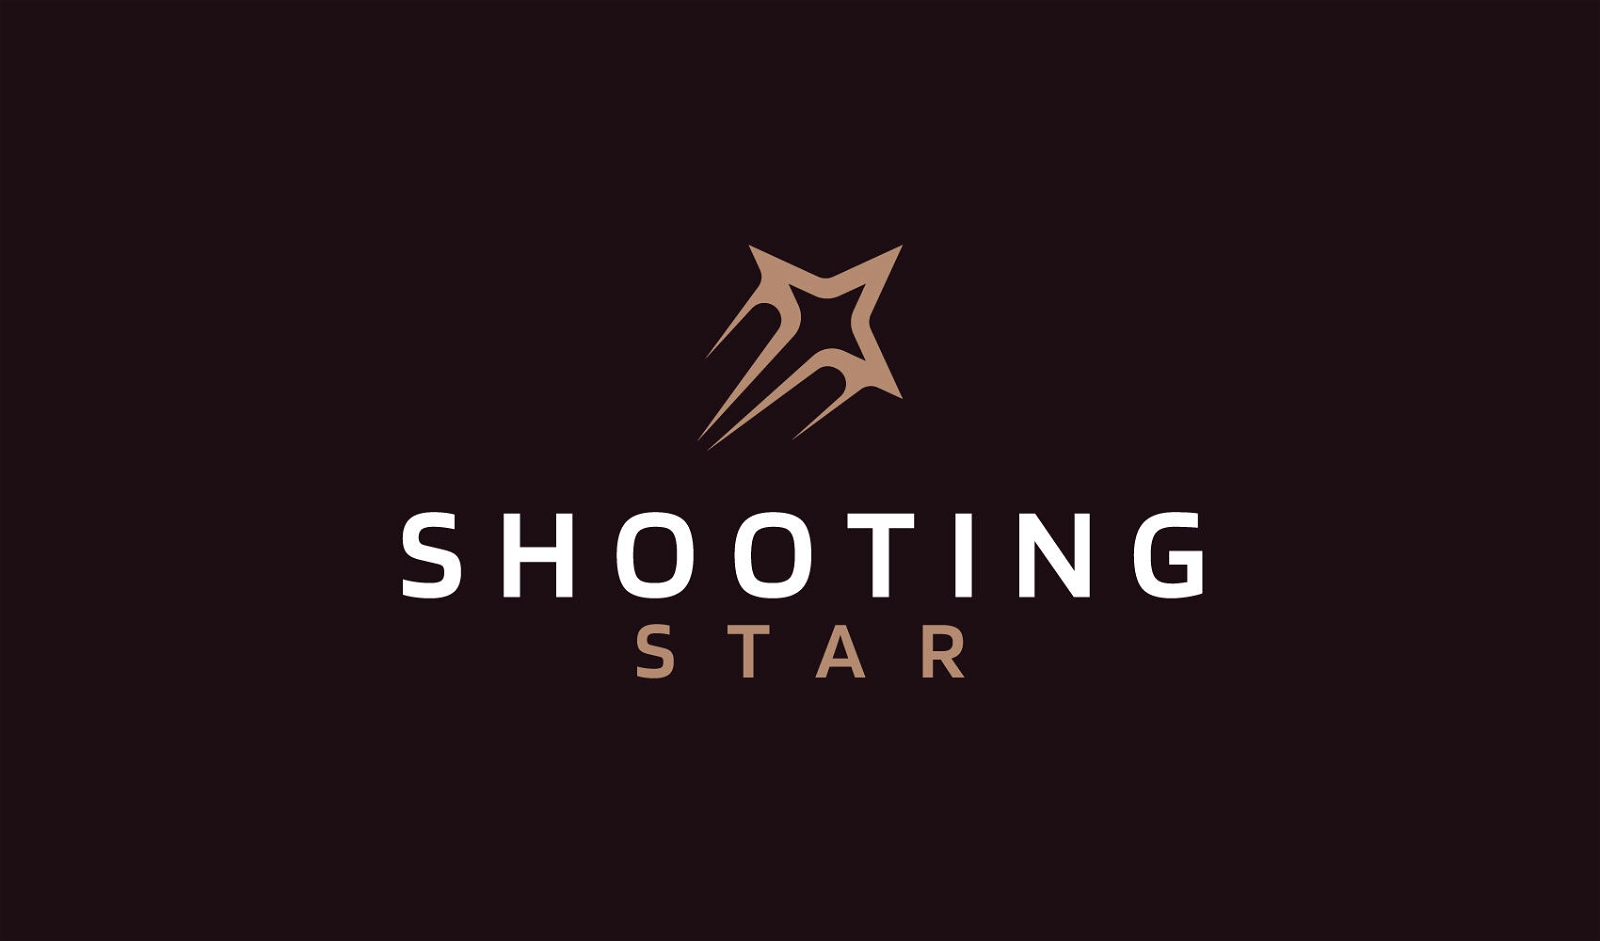 Shooting star logo design